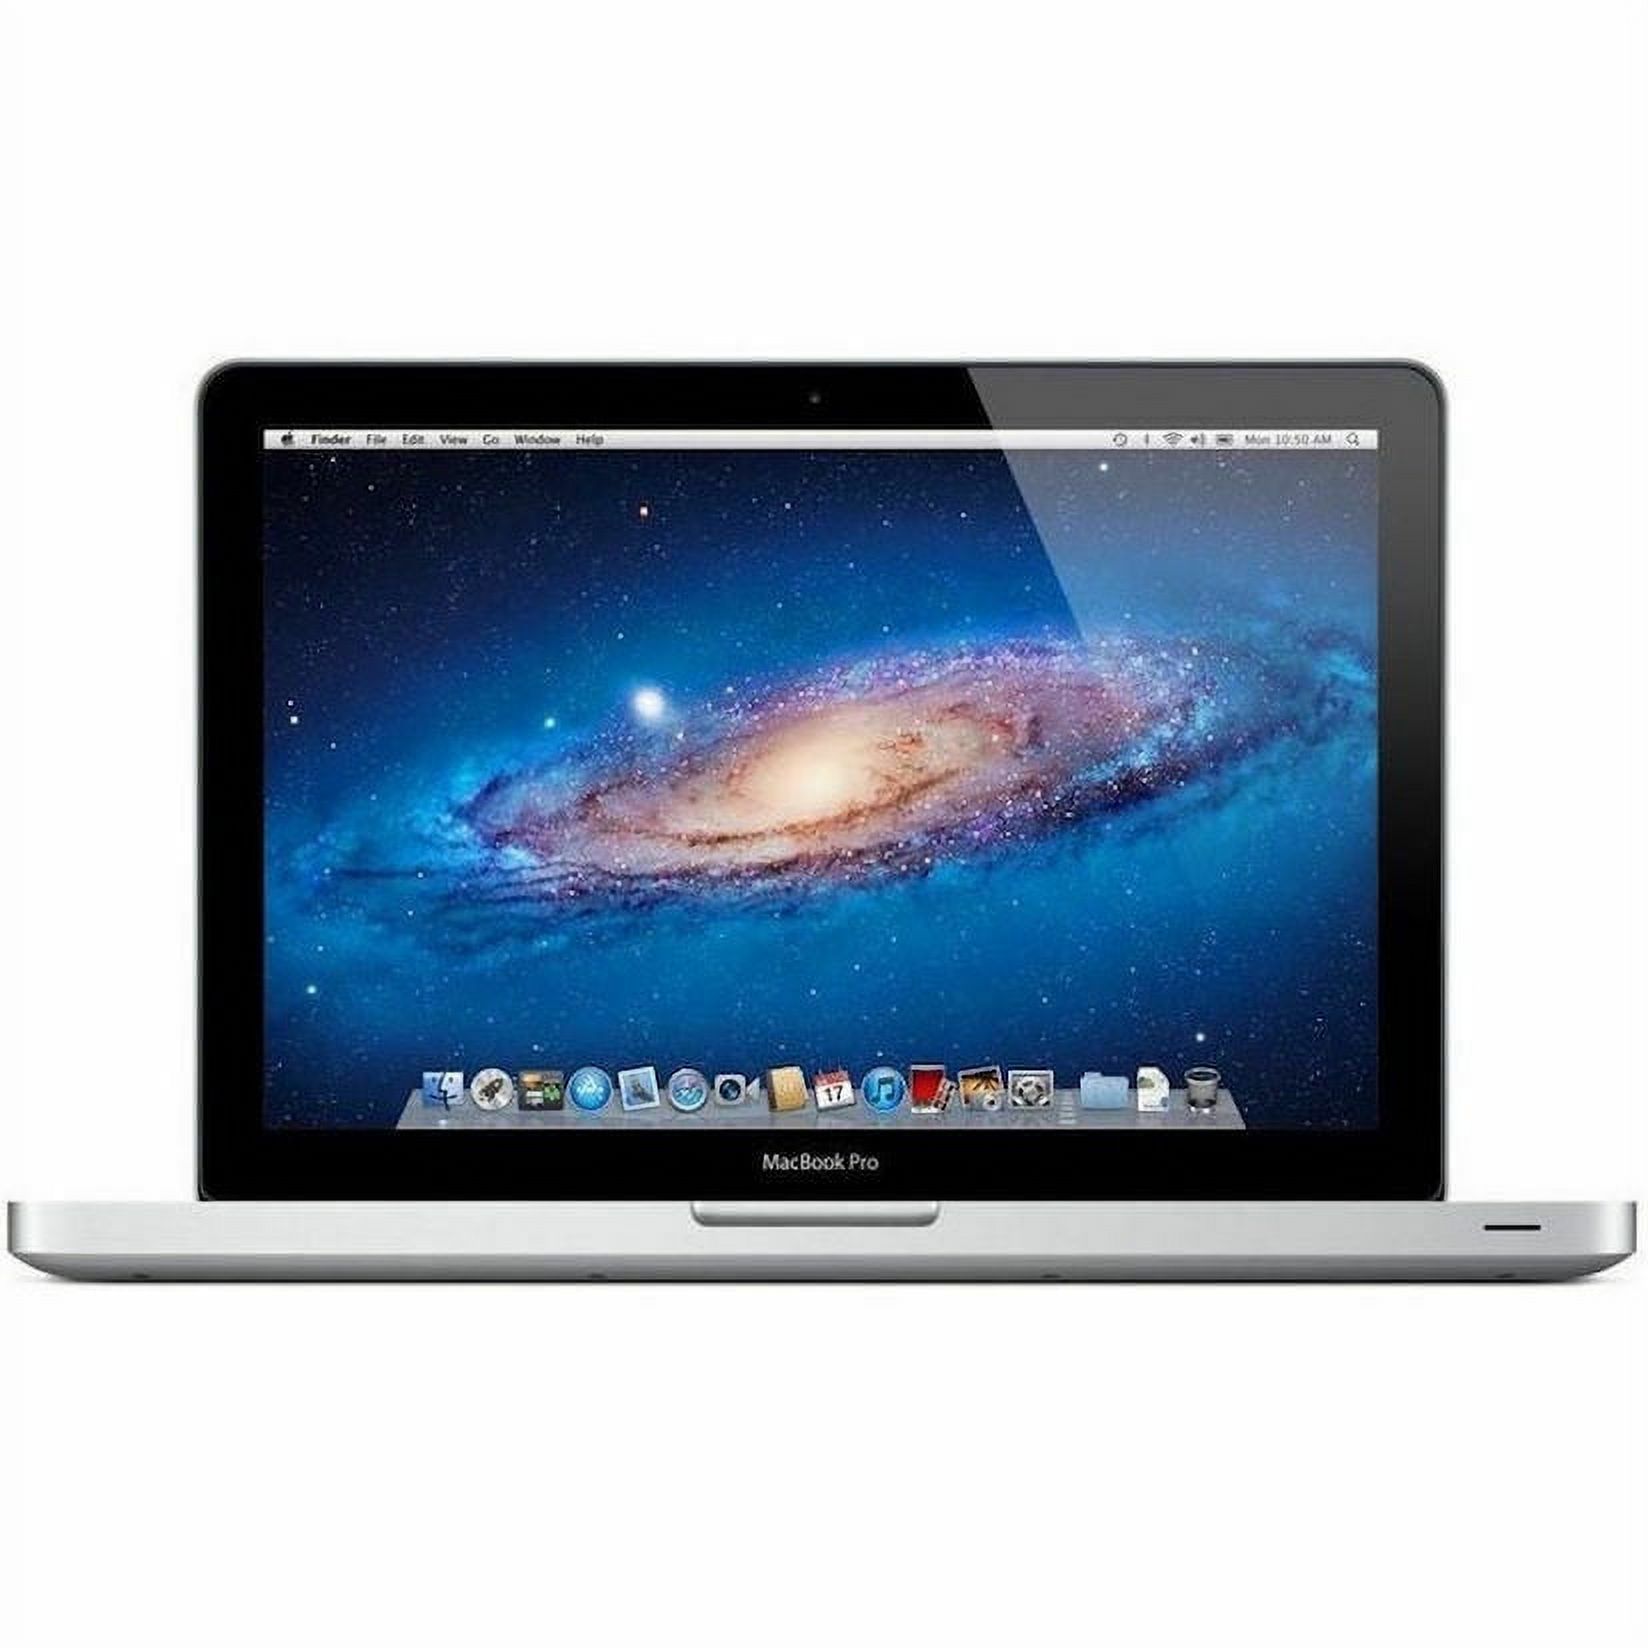 Restored Apple MacBook Pro Laptop Core i7 2.9GHz 8GB RAM 750GB HD 13" MD102LL/A (2012) (Refurbished) - image 1 of 6